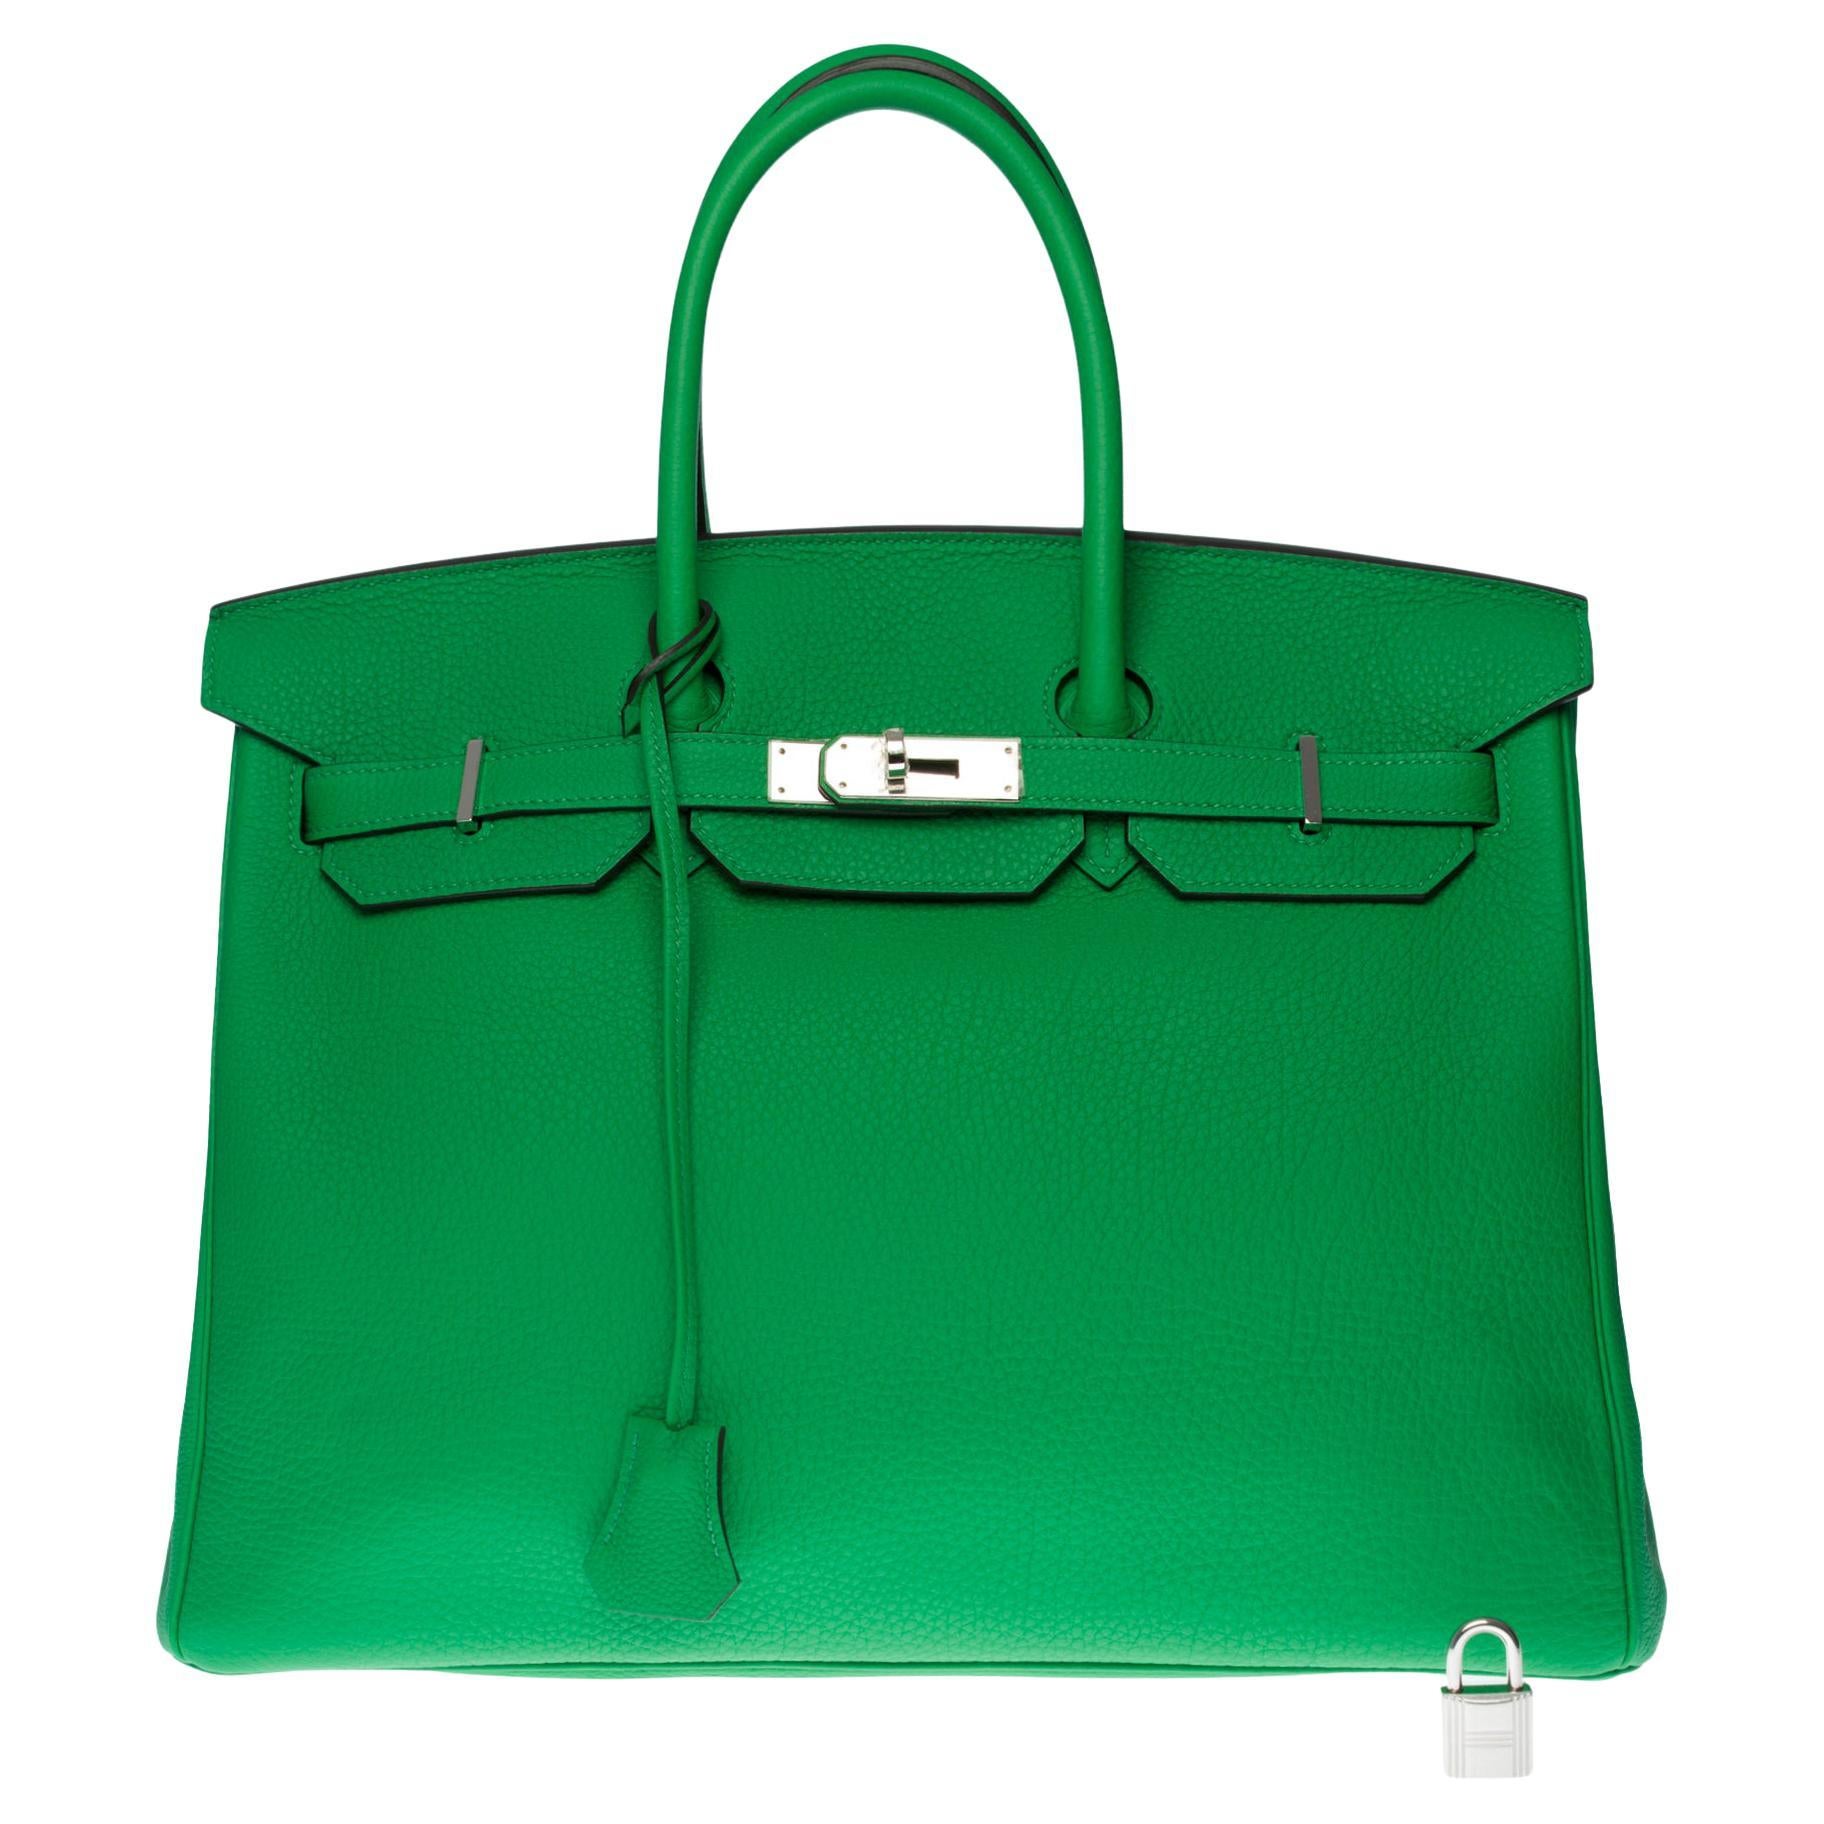 New Condition Hermès Birkin 35 handbag in Vert Bamboo Togo leather, SHW